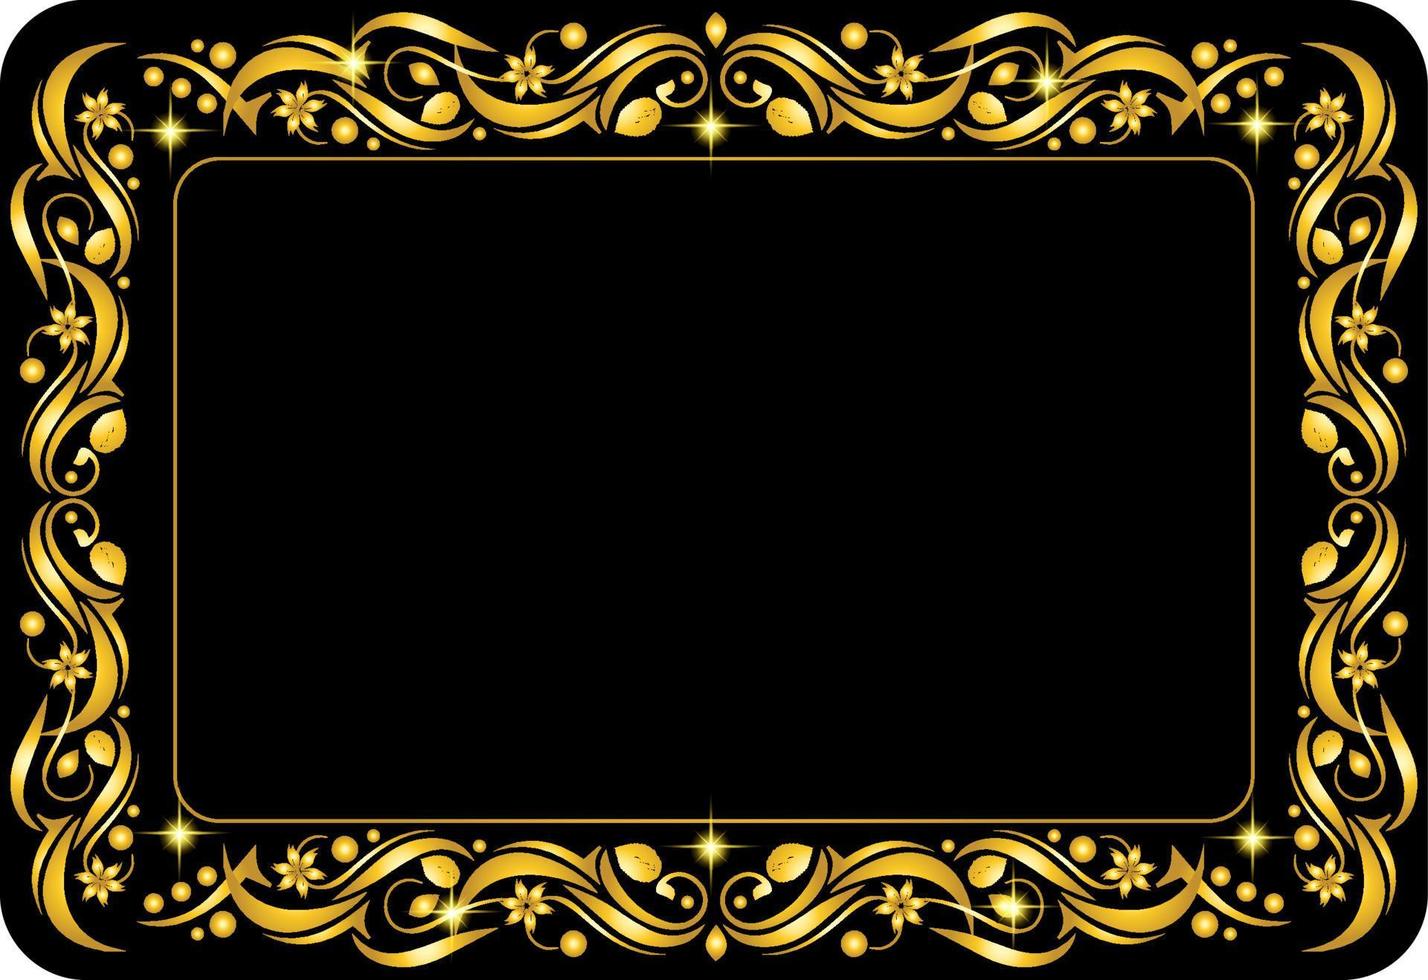 Golden Floral Border Frame Card Design with starlight on black background vector